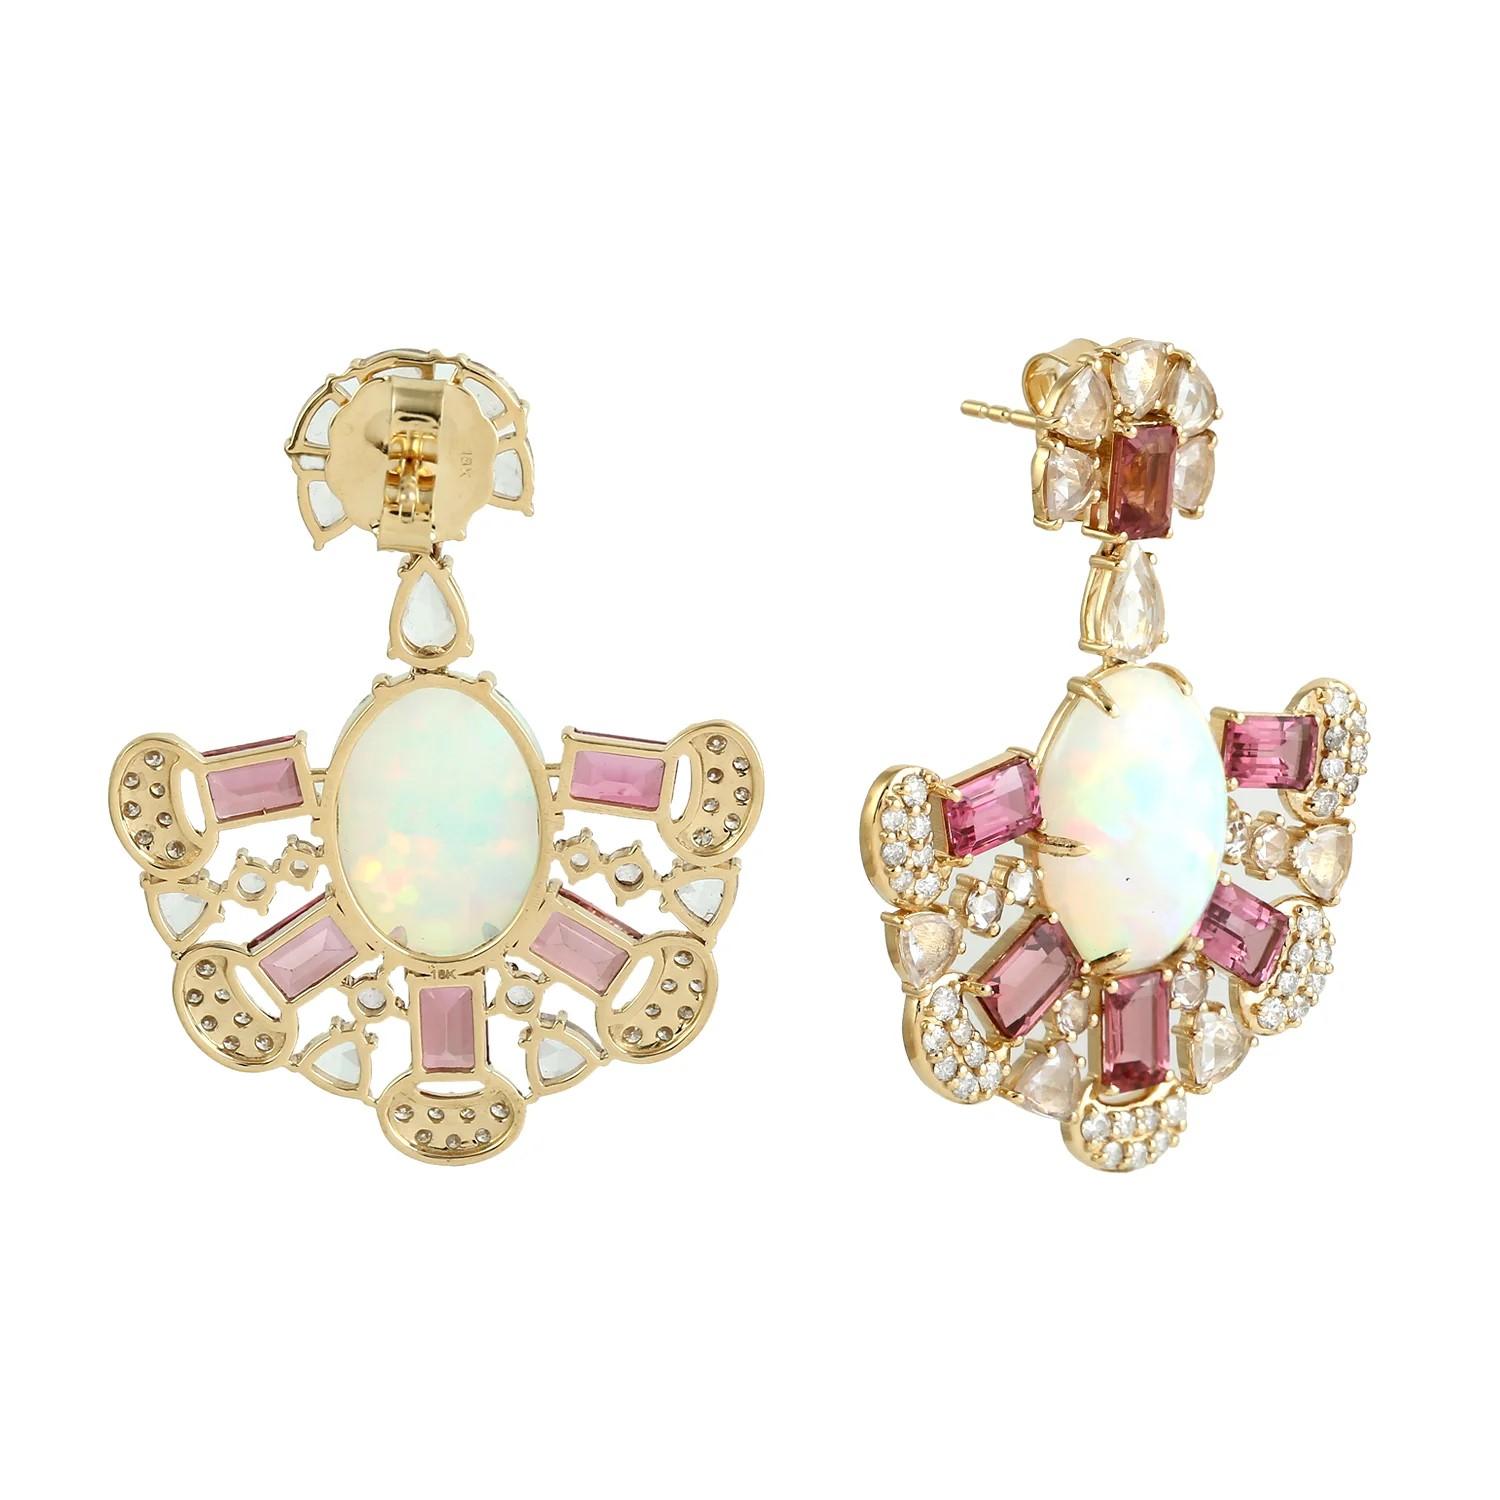 Mixed Cut Meghna Jewels 9.41 carat Ethiopian Opal Tourmaline Diamond 14K Gold Earrings